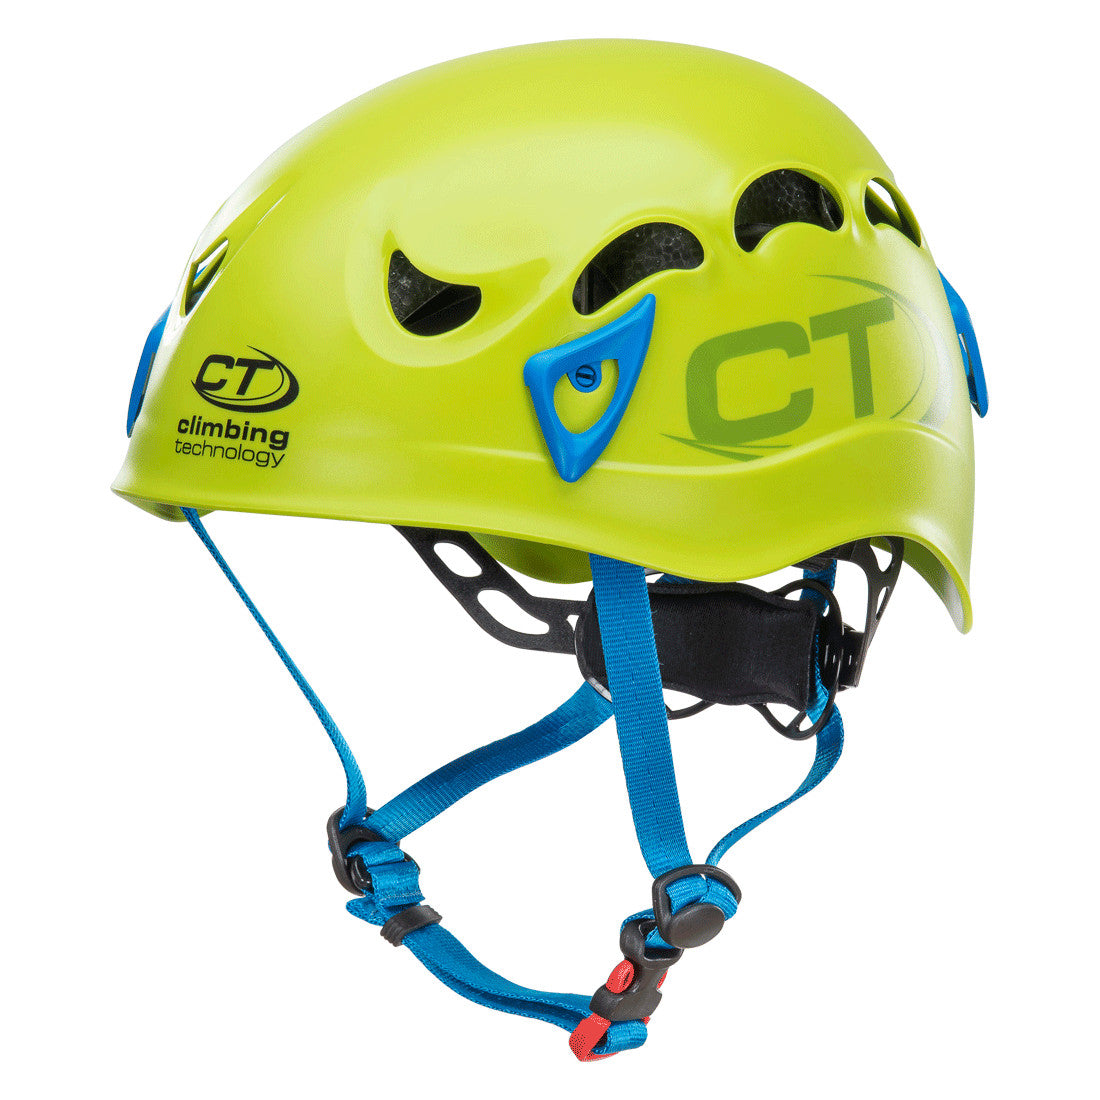 Climbing Technology Galaxy climbing helmet, in green and blue colours